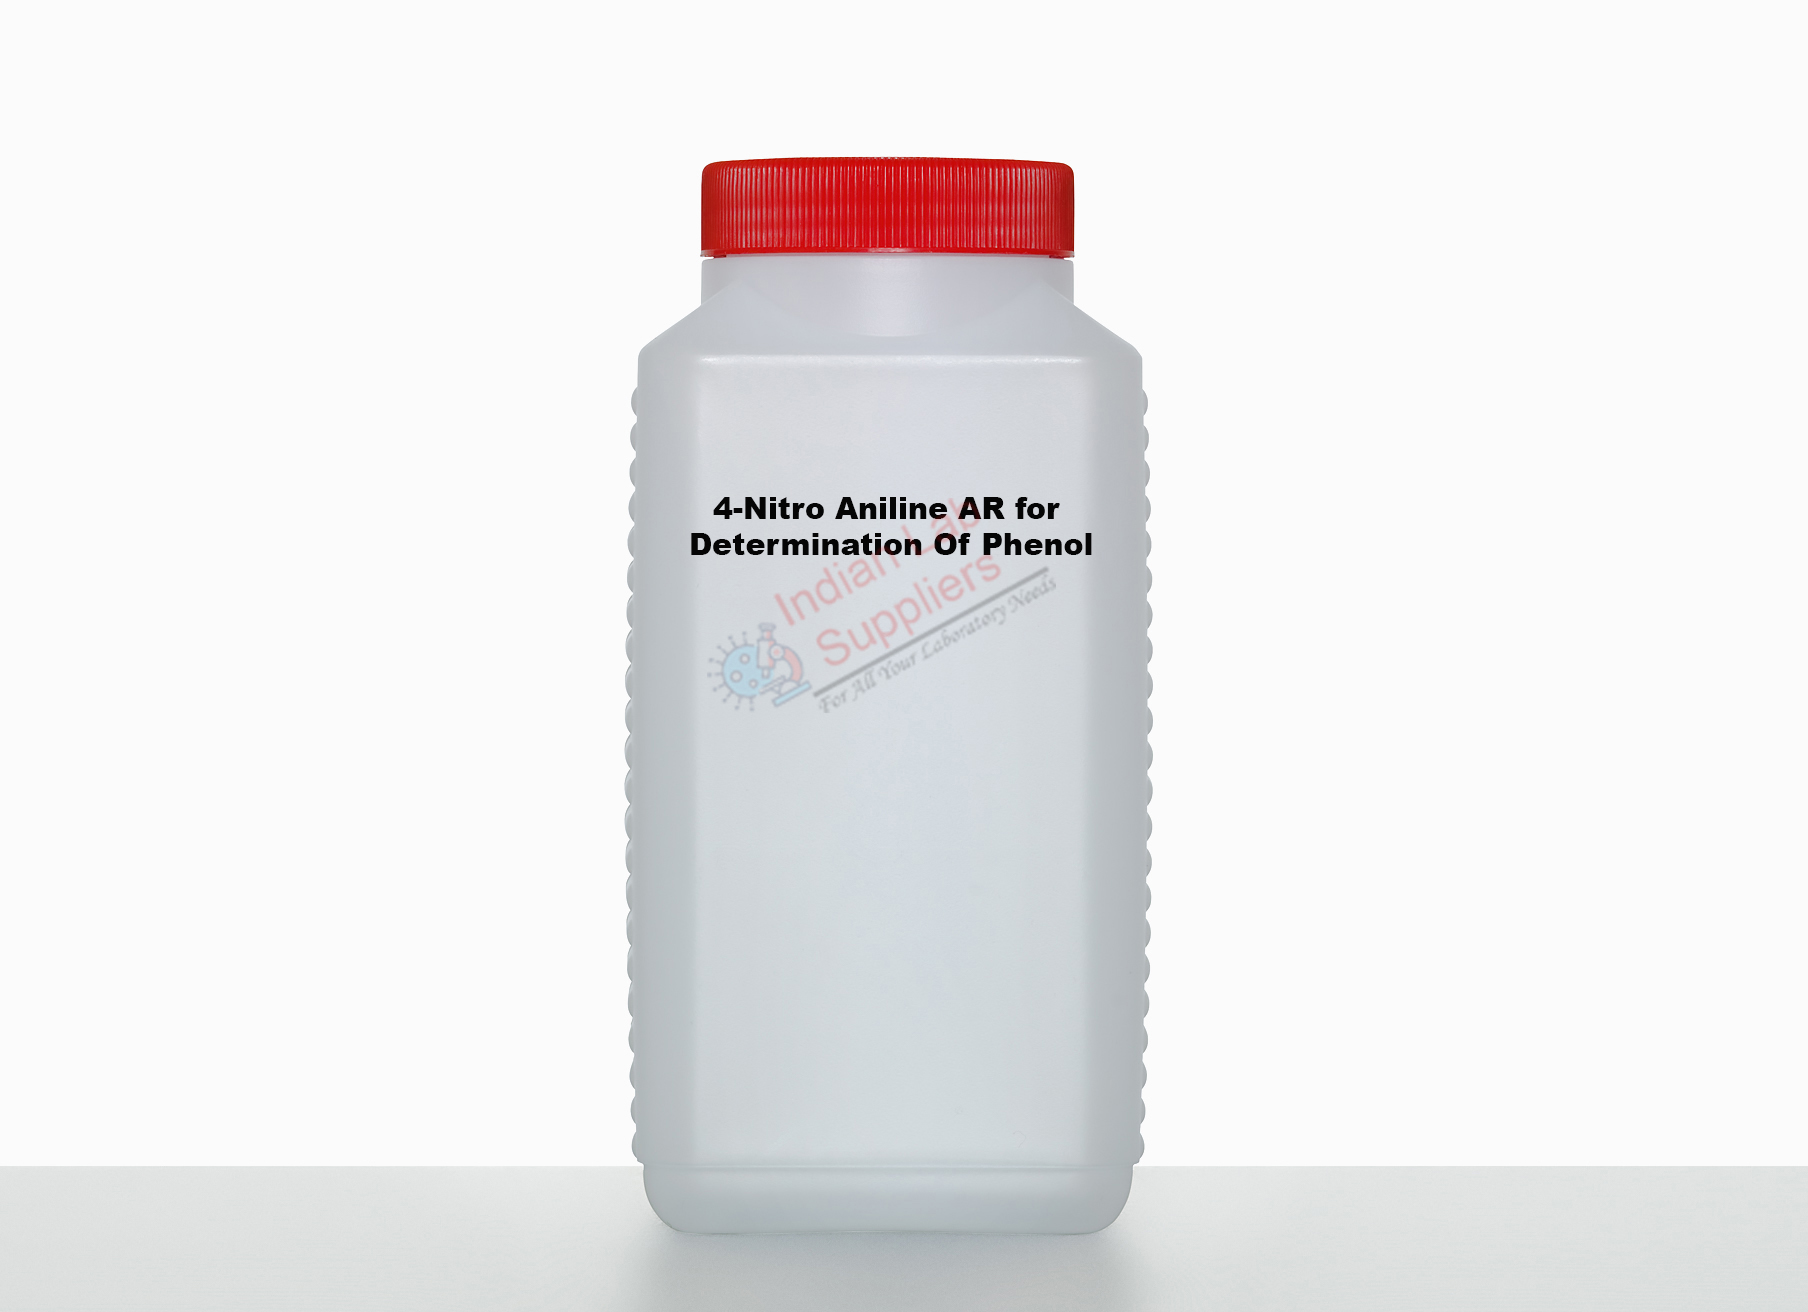 4-Nitro Aniline AR for Determination Of Phenol